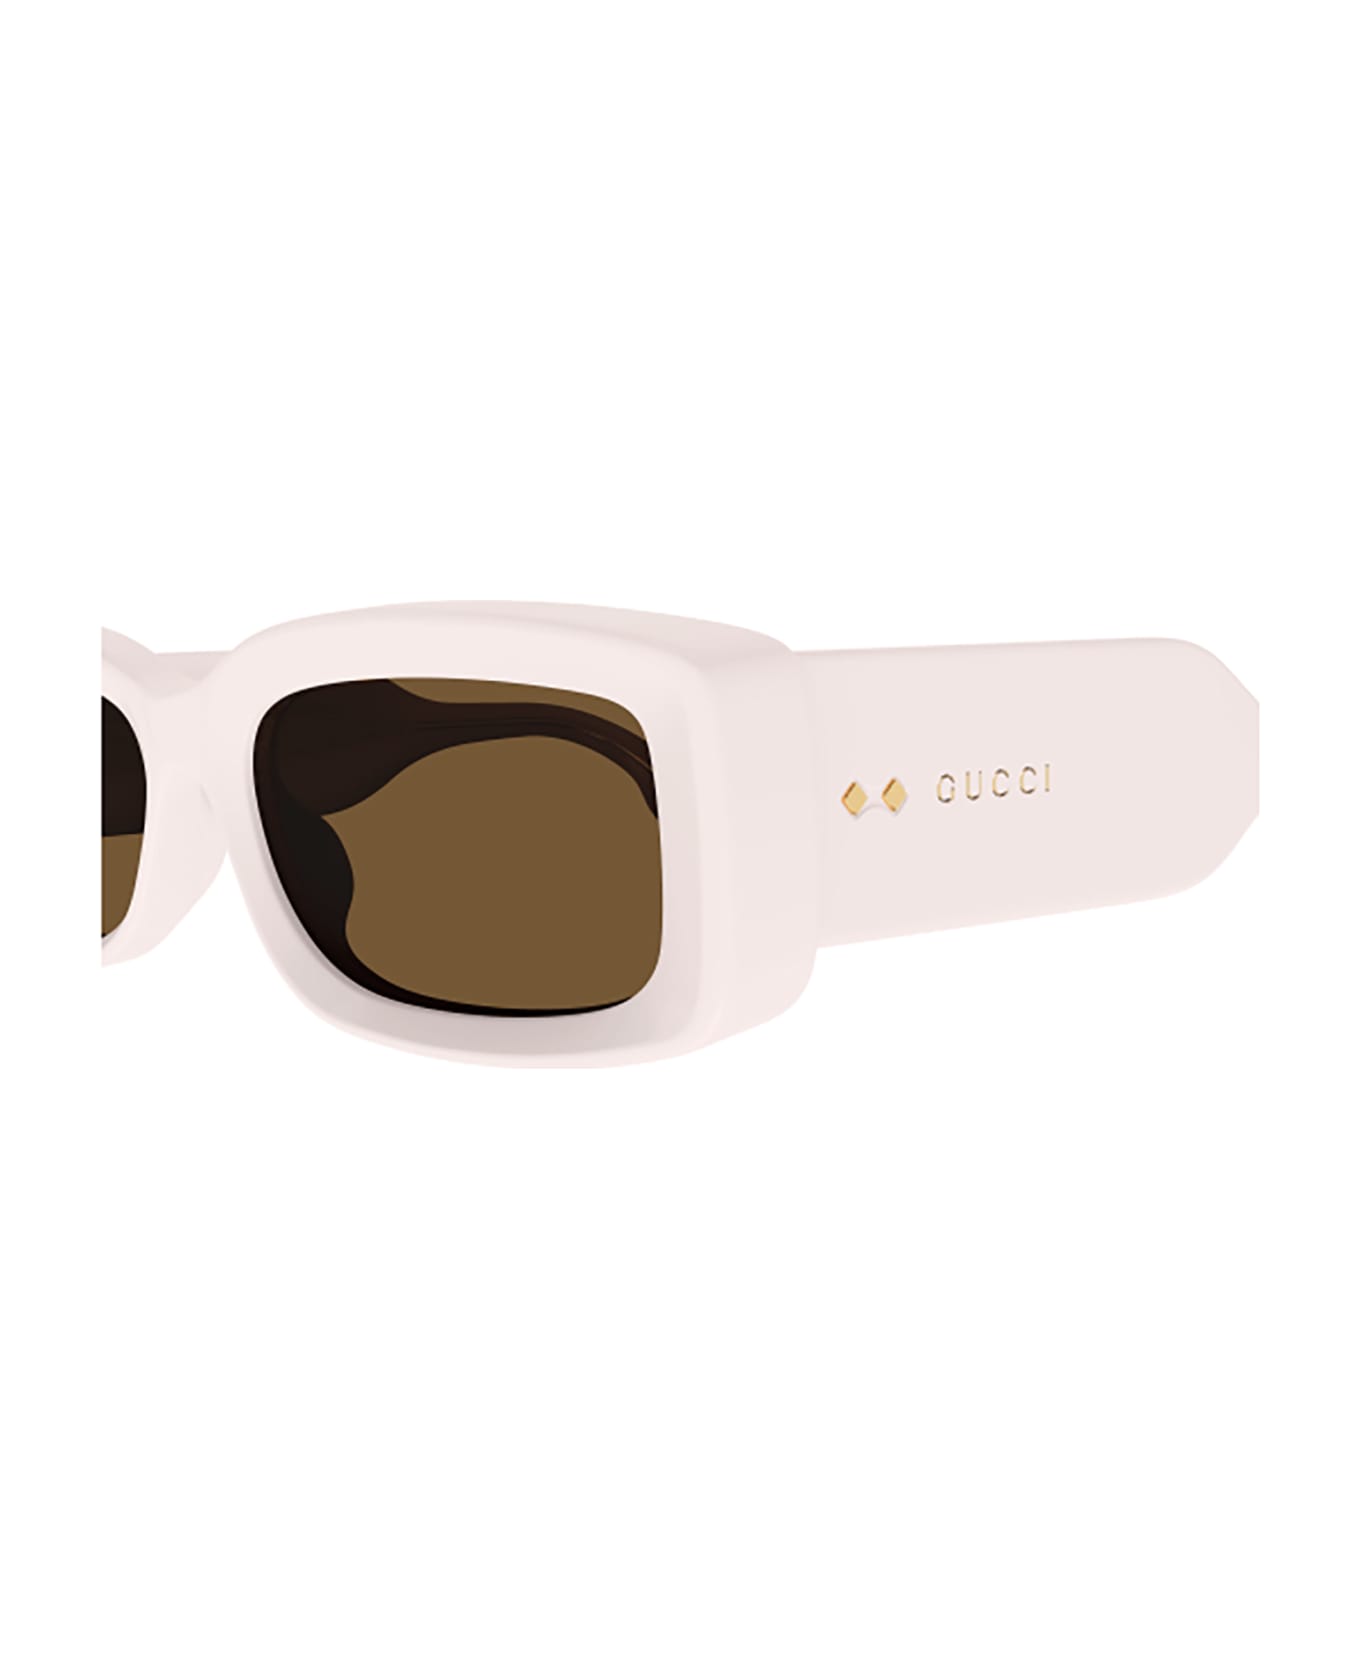 Gucci Eyewear GG1528S Sunglasses - Ivory Ivory Brown